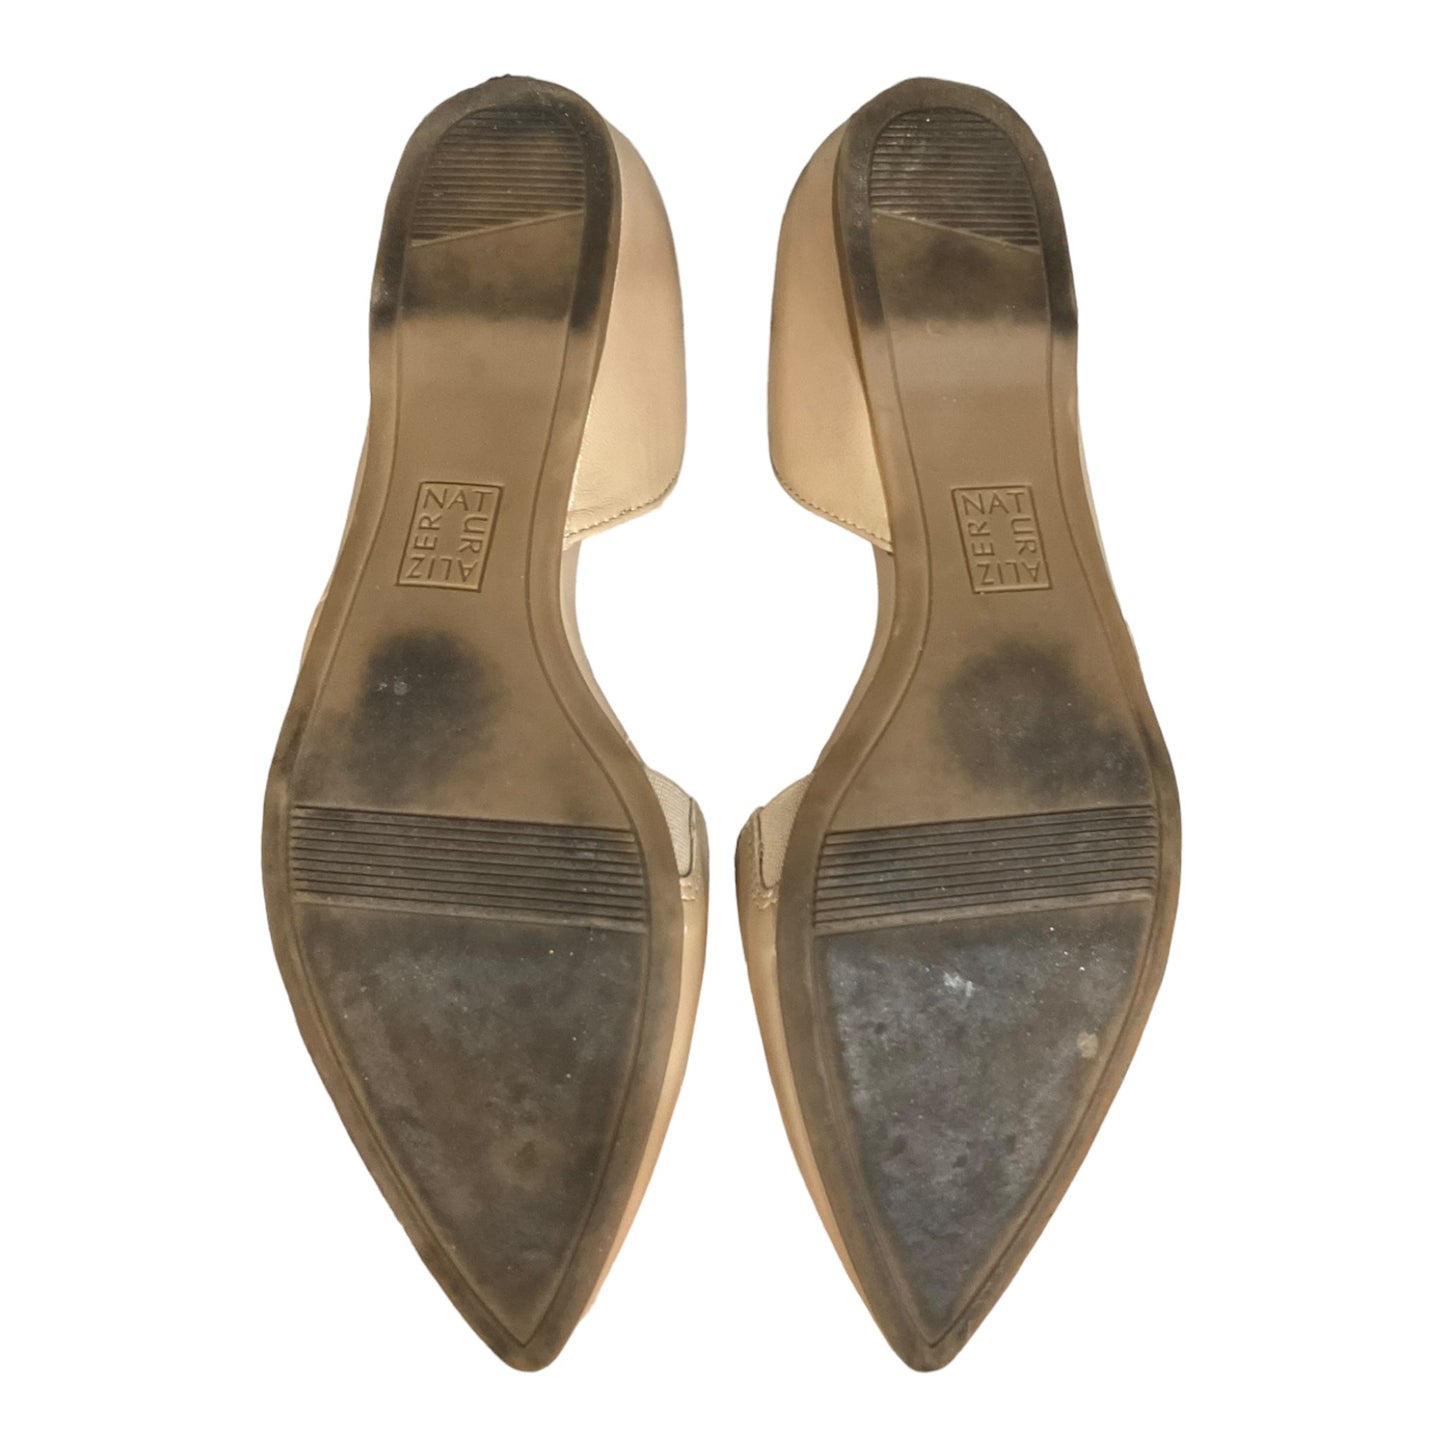 Beige Shoes Heels Wedge Naturalizer, Size 8.5